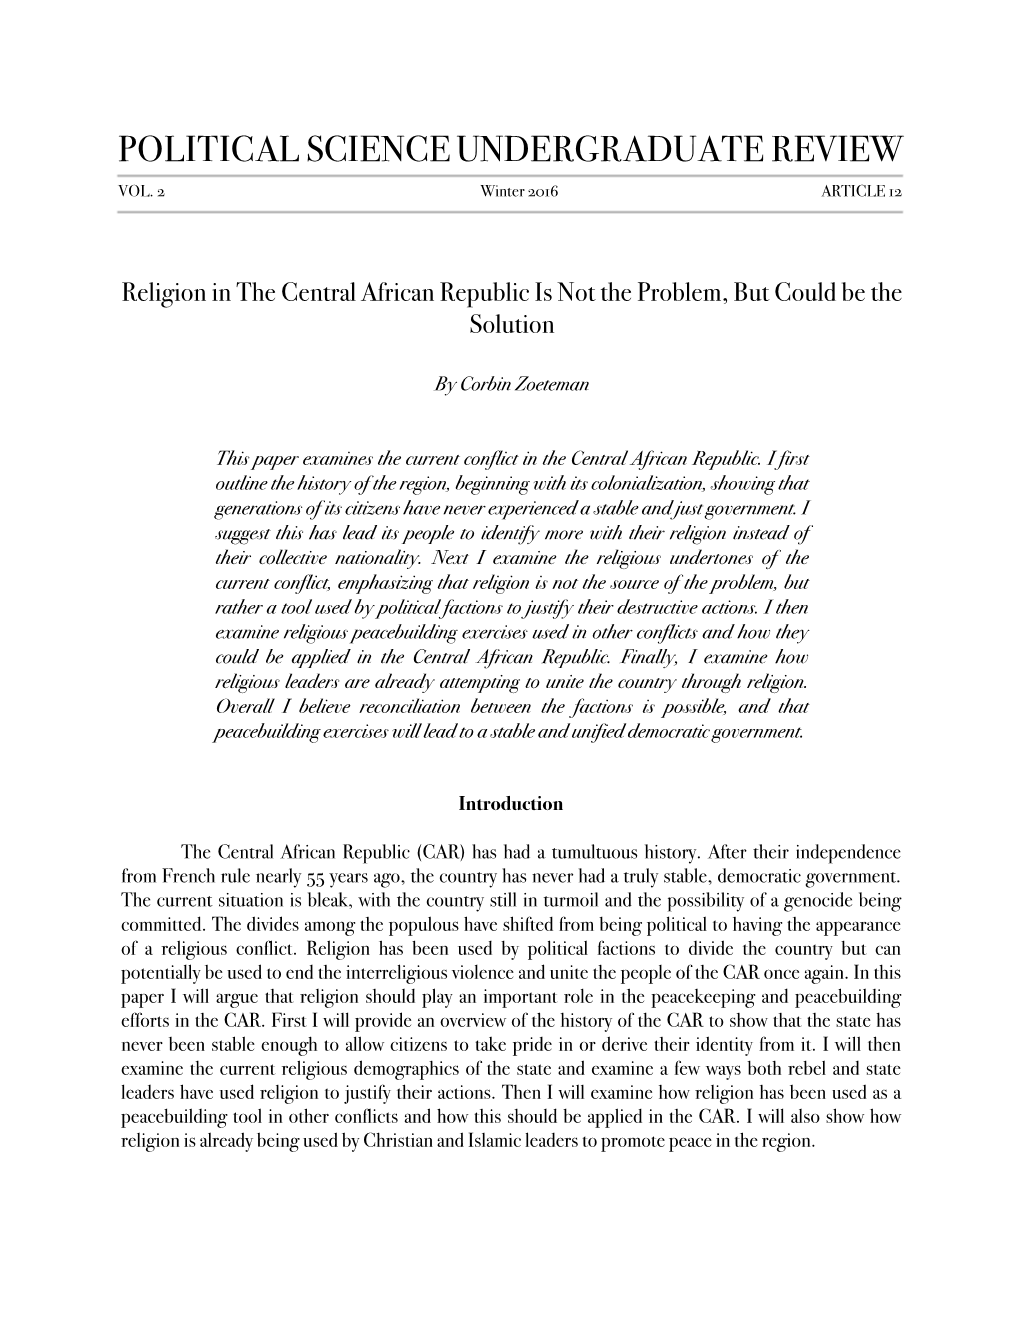 Political Science Undergraduate Review Vol